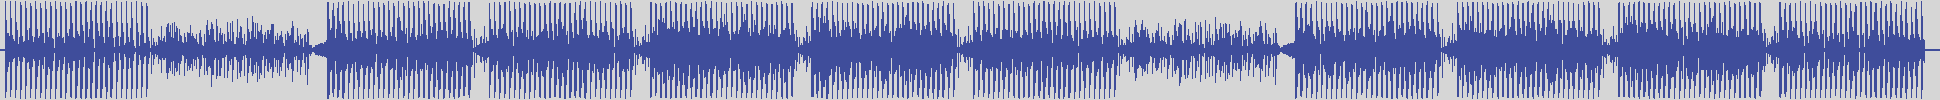 nf_boyz_records [NFY062] Robert Reston - My Hammok [Sun Avenue Mix] audio wave form